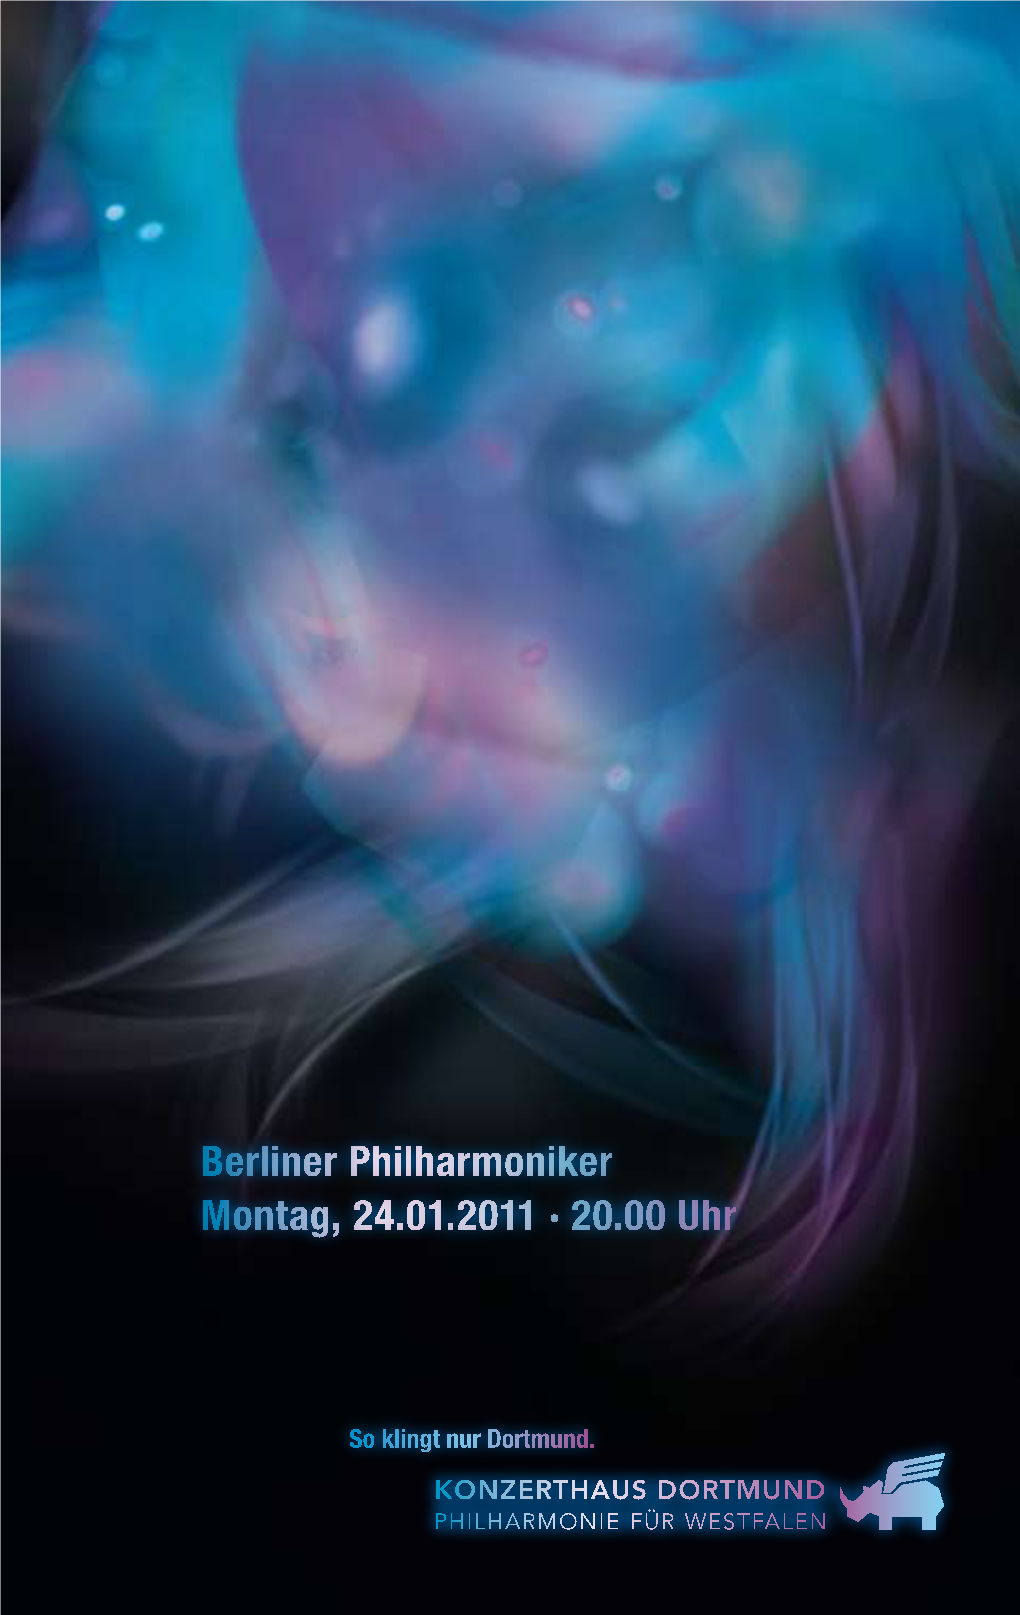 20.00 Uhr Berliner Philharmoniker Montag, 24.01.2011